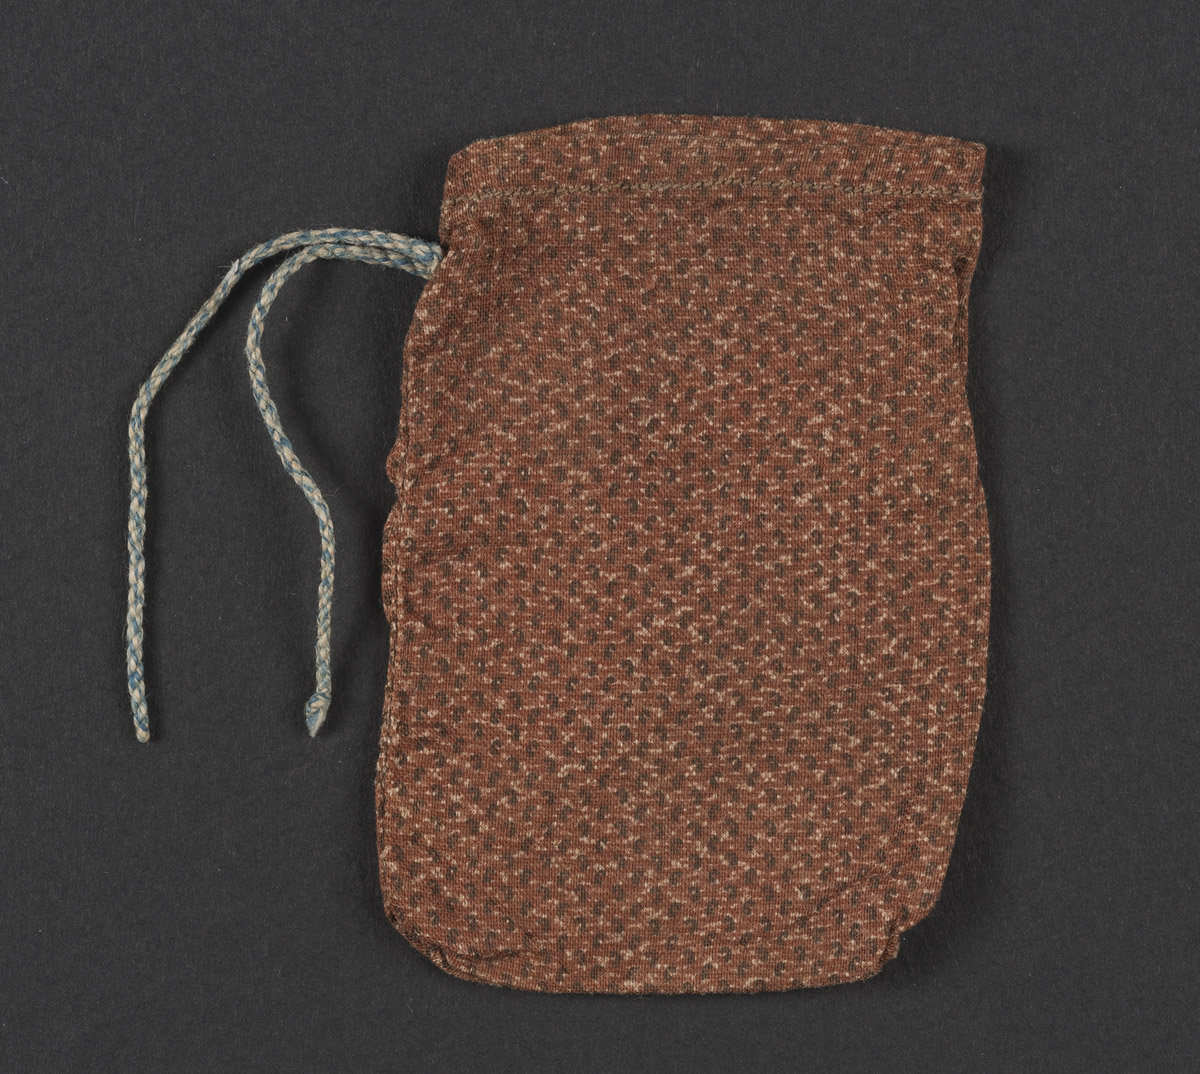 Textiles - Bag